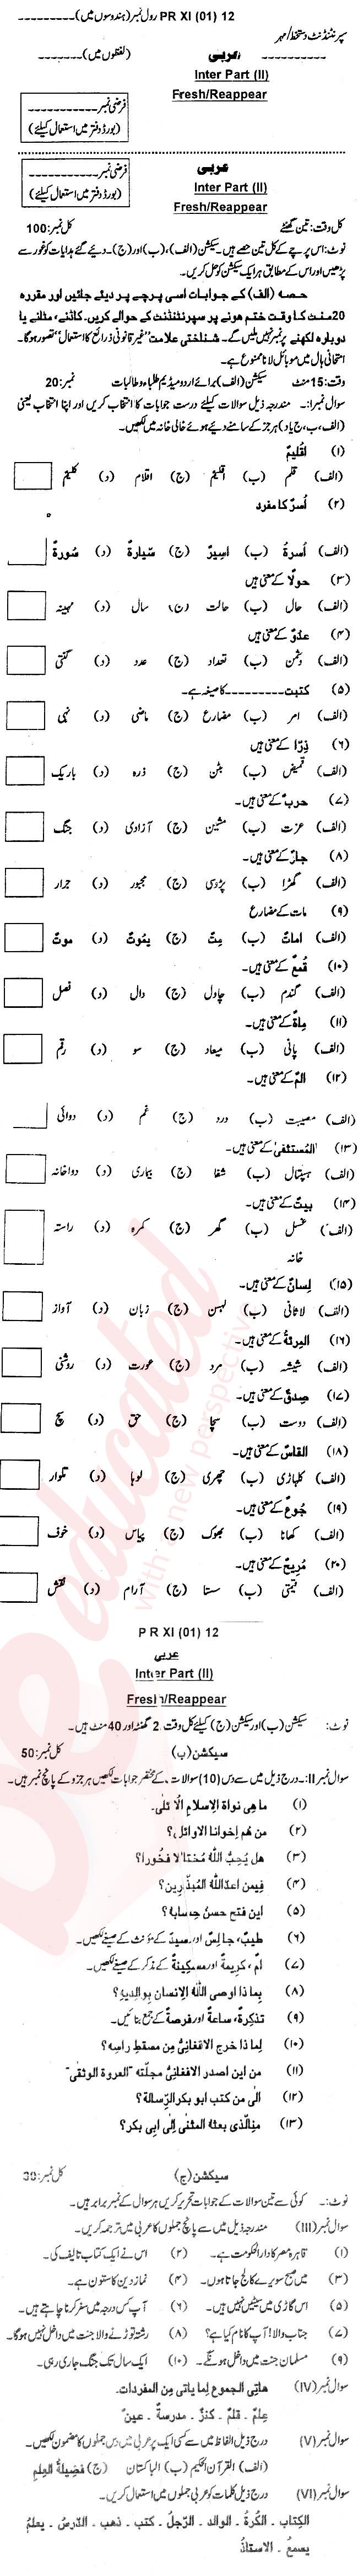 Arabic FA Part 2 Past Paper Group 1 BISE Kohat 2012